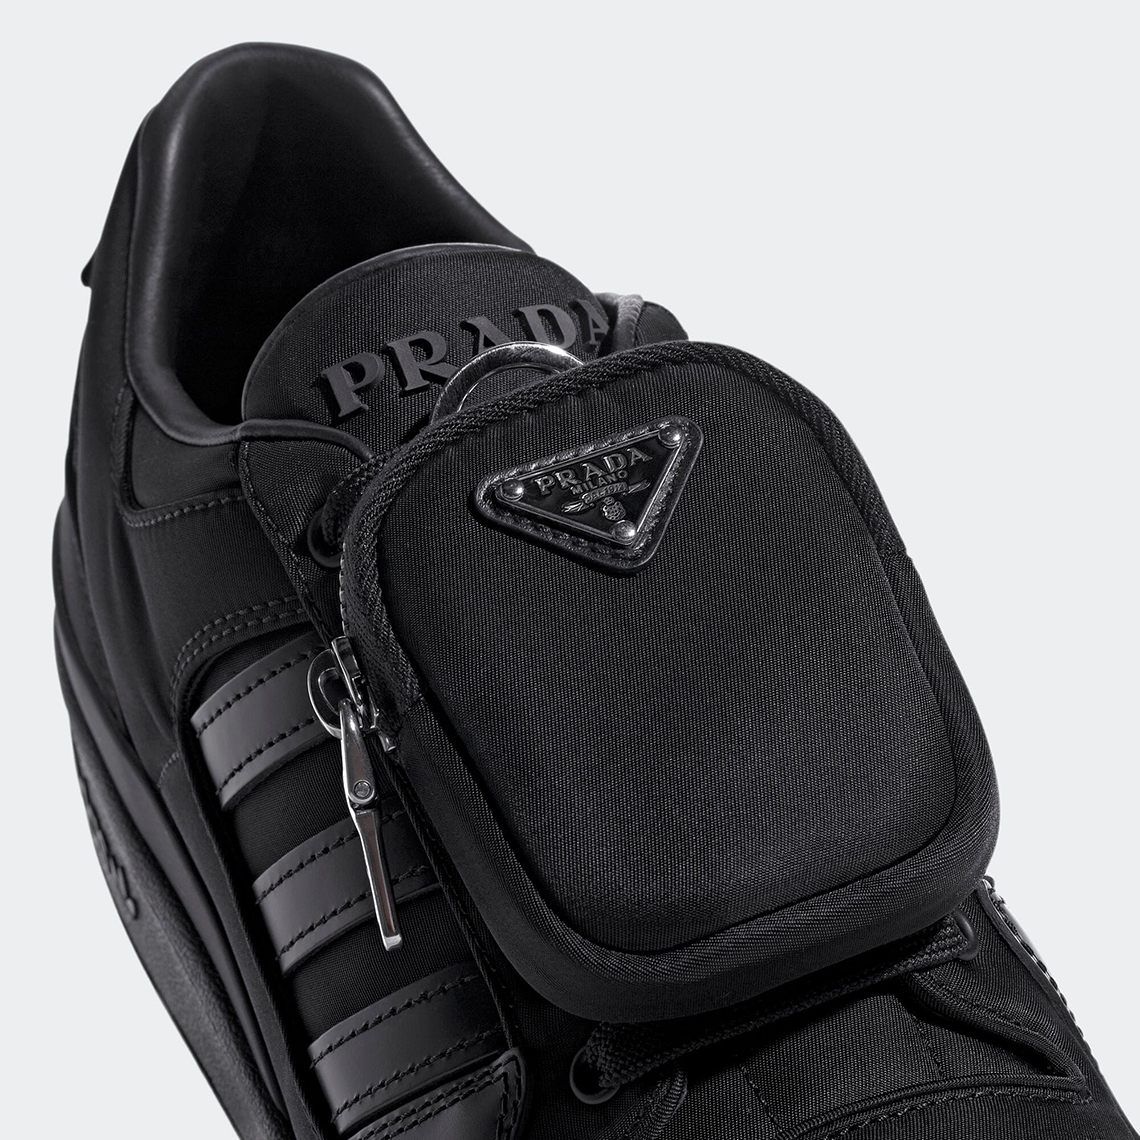 prada for adidas coral forum lo re nylon core black GY7043 4